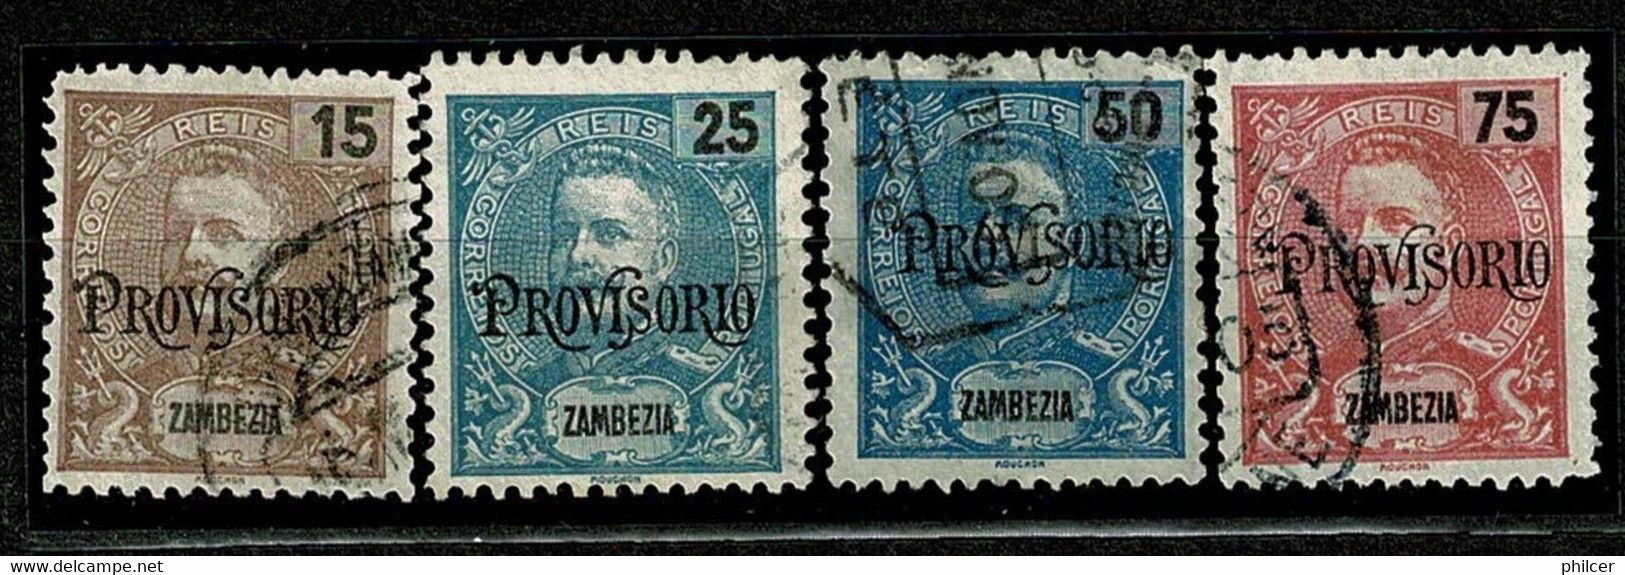 Zambézia, 1903, # 42/5, Used - Zambezia